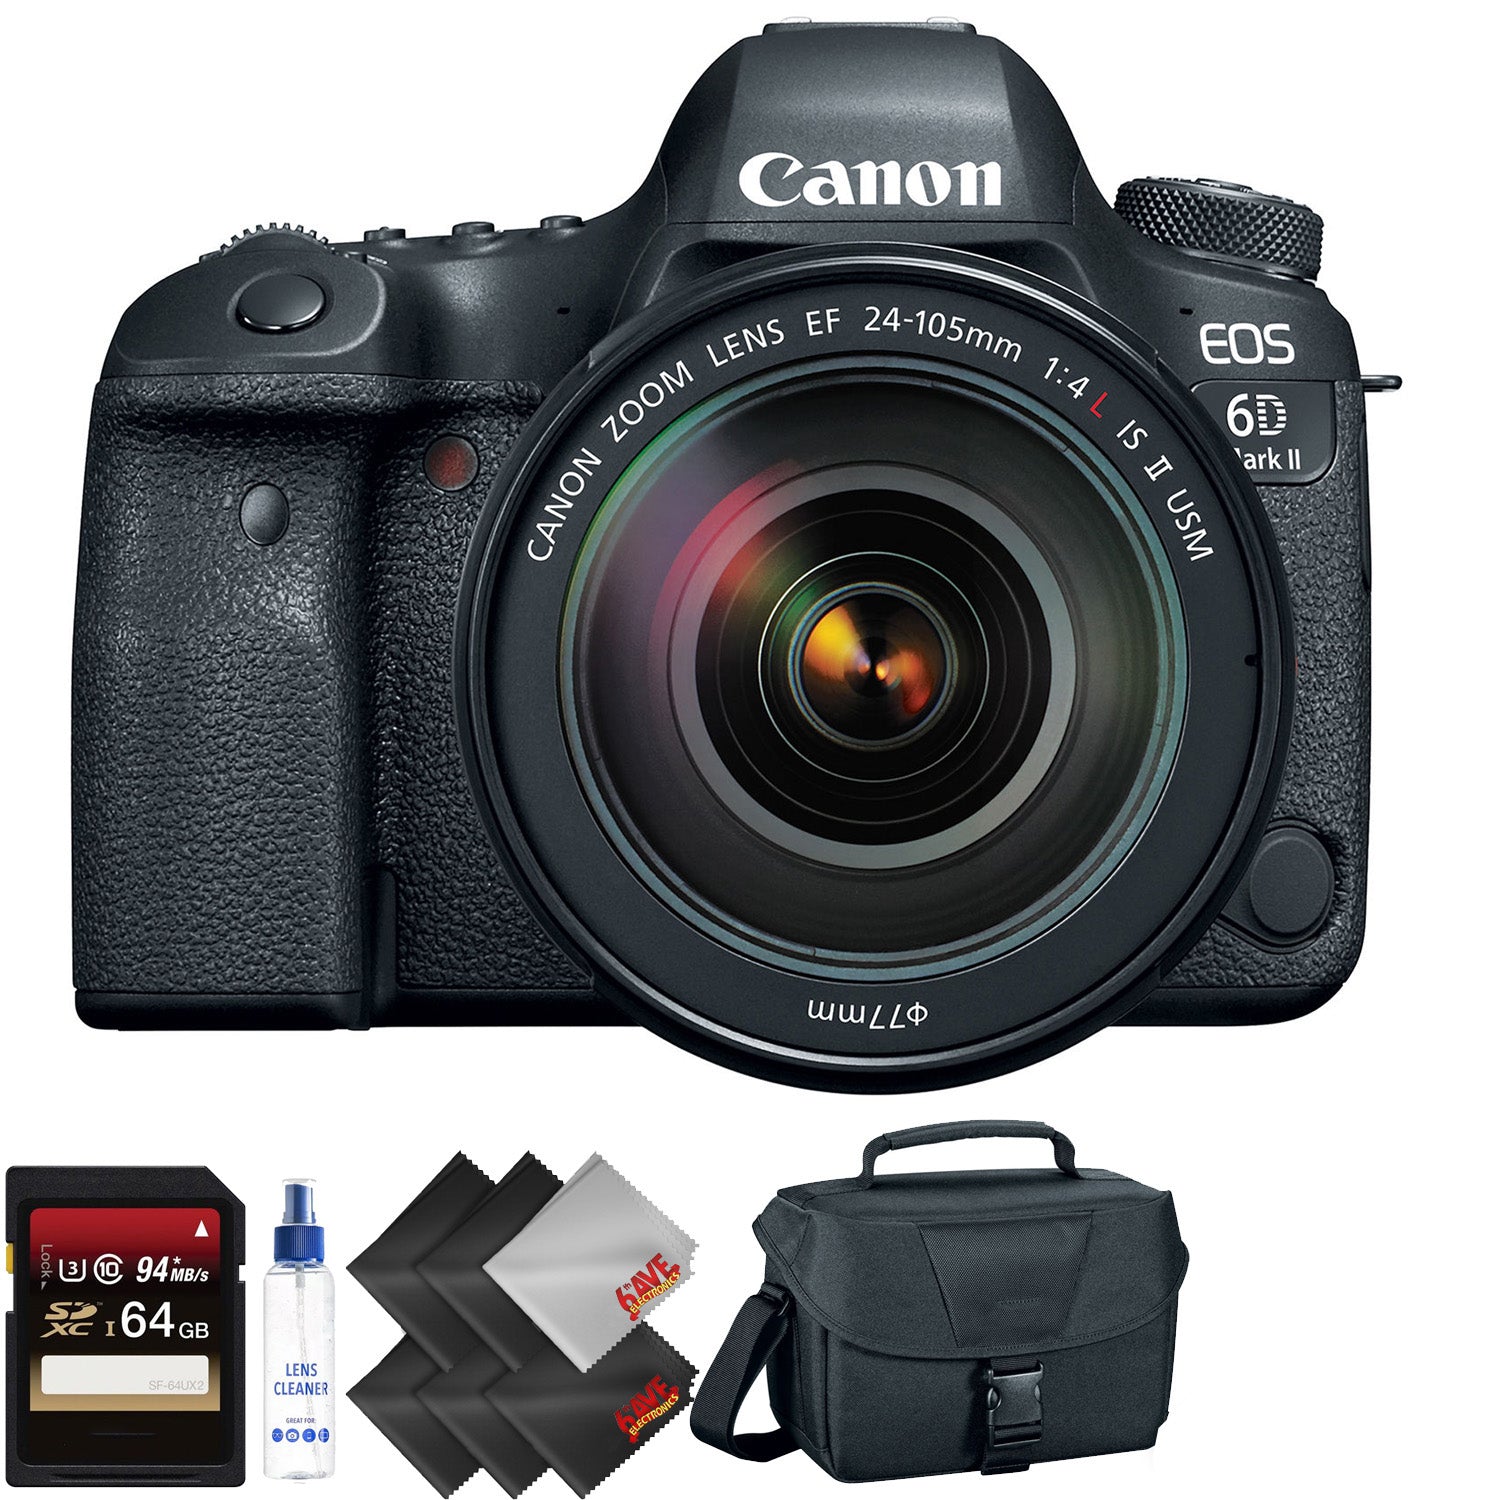 Canon EOS 6D Mark II DSLR Camera with 24-105mm f/4L II Lens + 64GB Memory Card + 1 Year Warranty